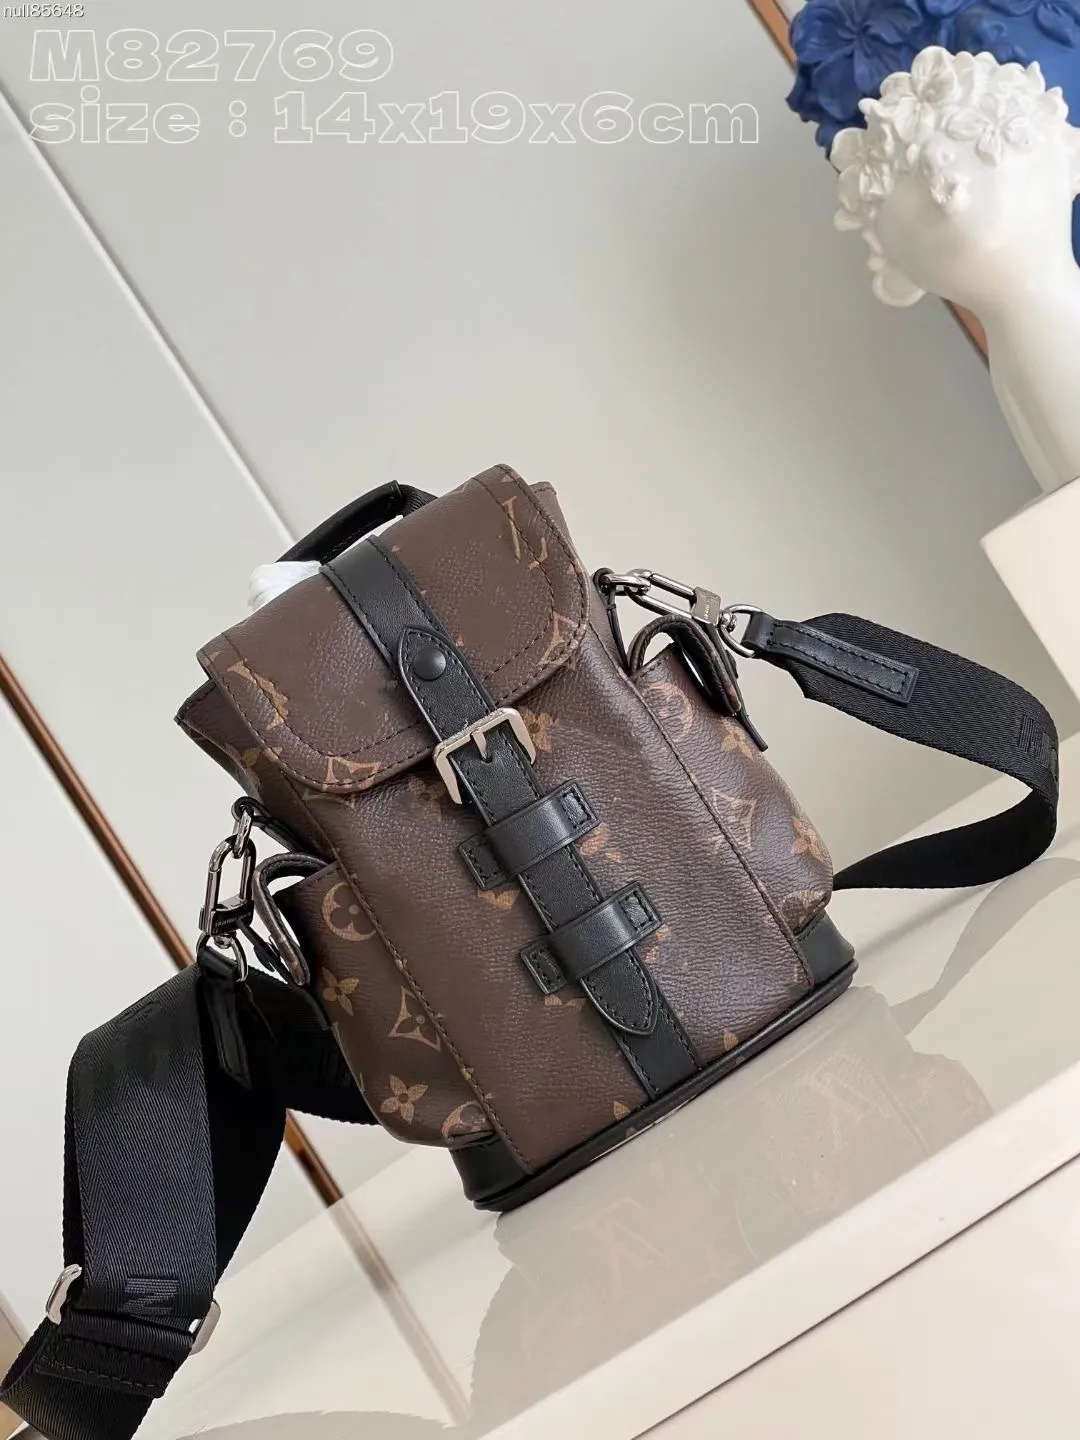 Top new men's crossbody bag mini size multifunctional backpack M82769 handbag